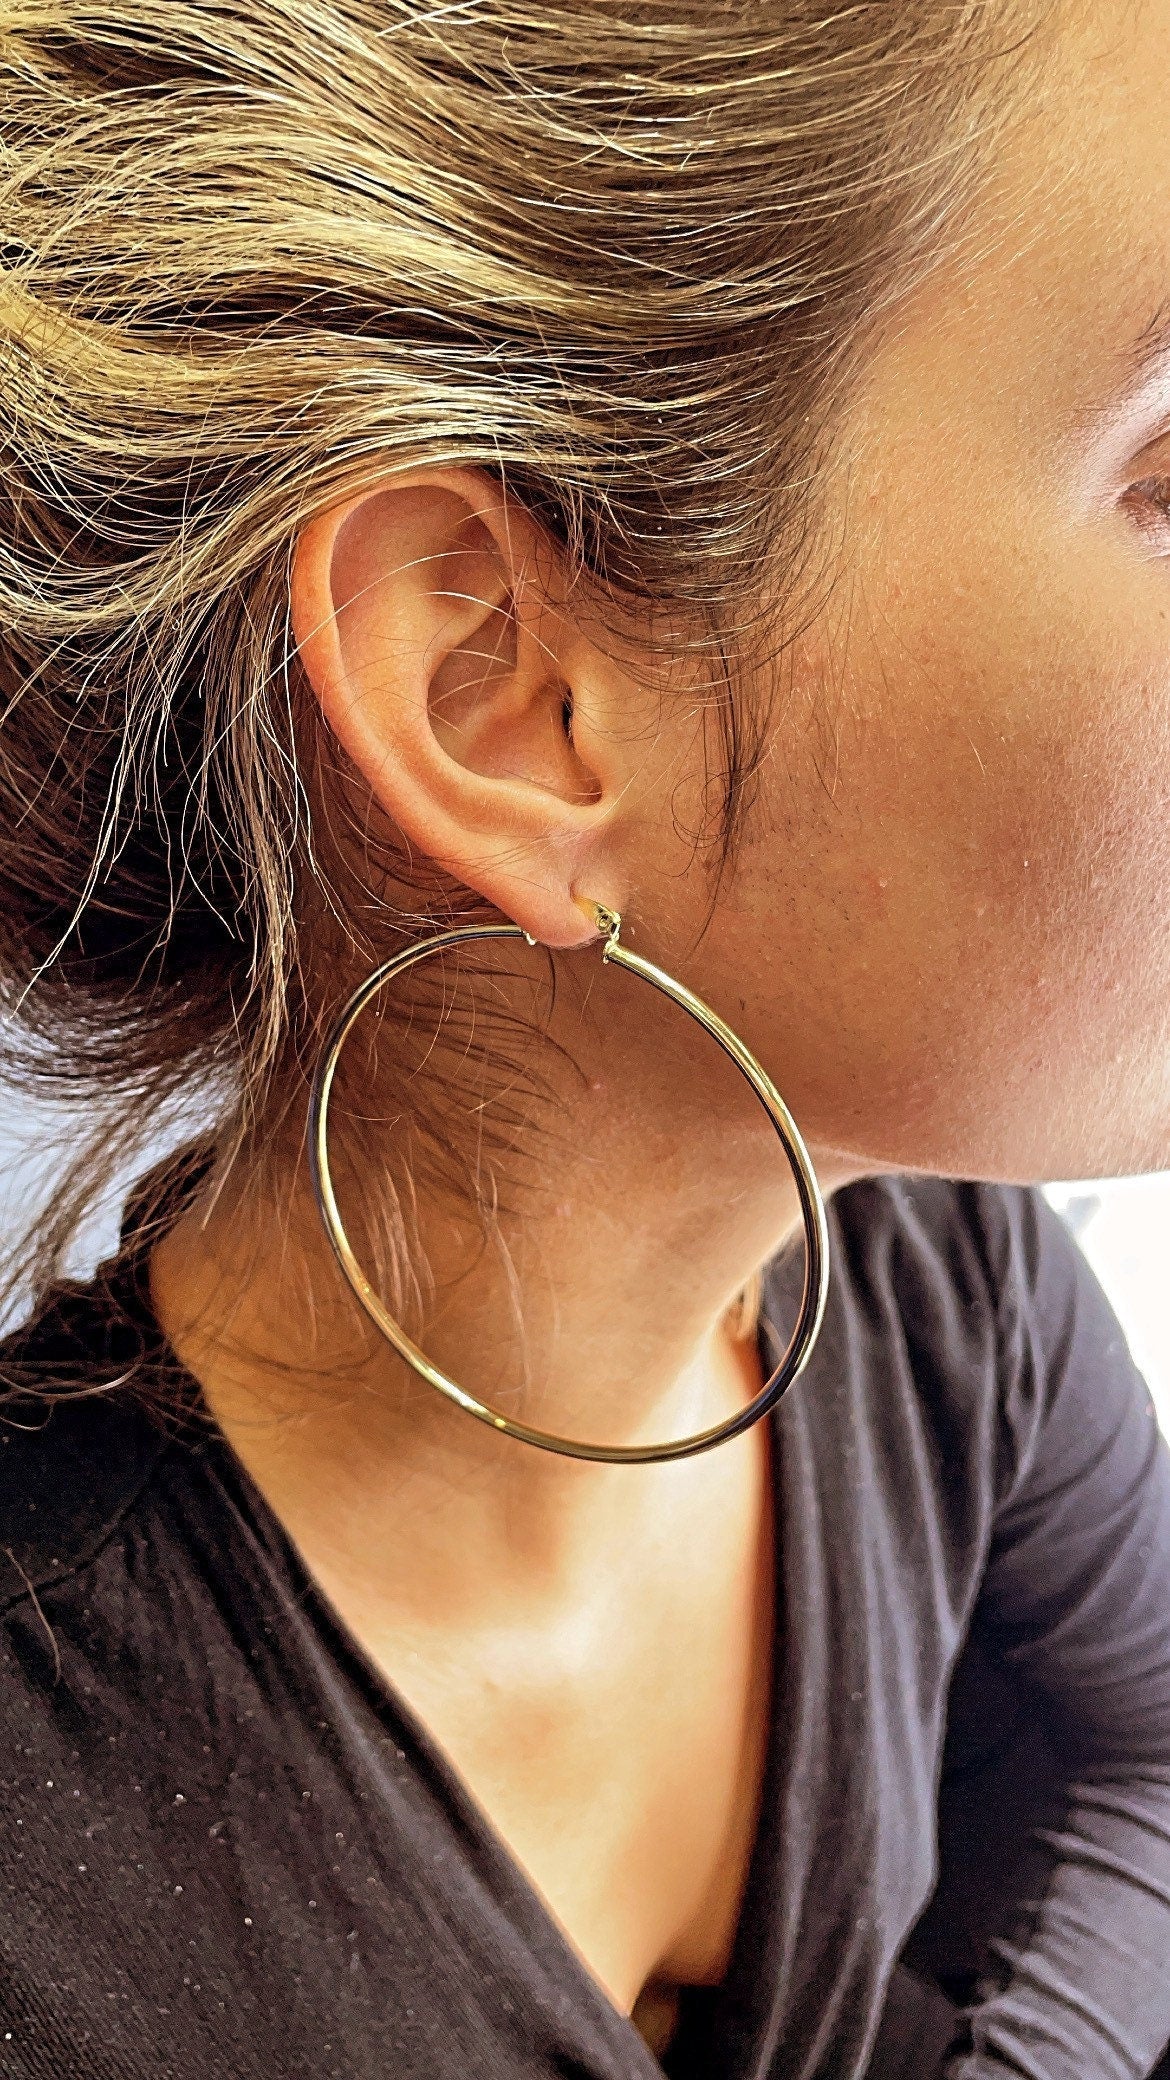 80mm Diameter 18k Gold Layered Thin Thread Hoop Earrings, Large Gold Plain